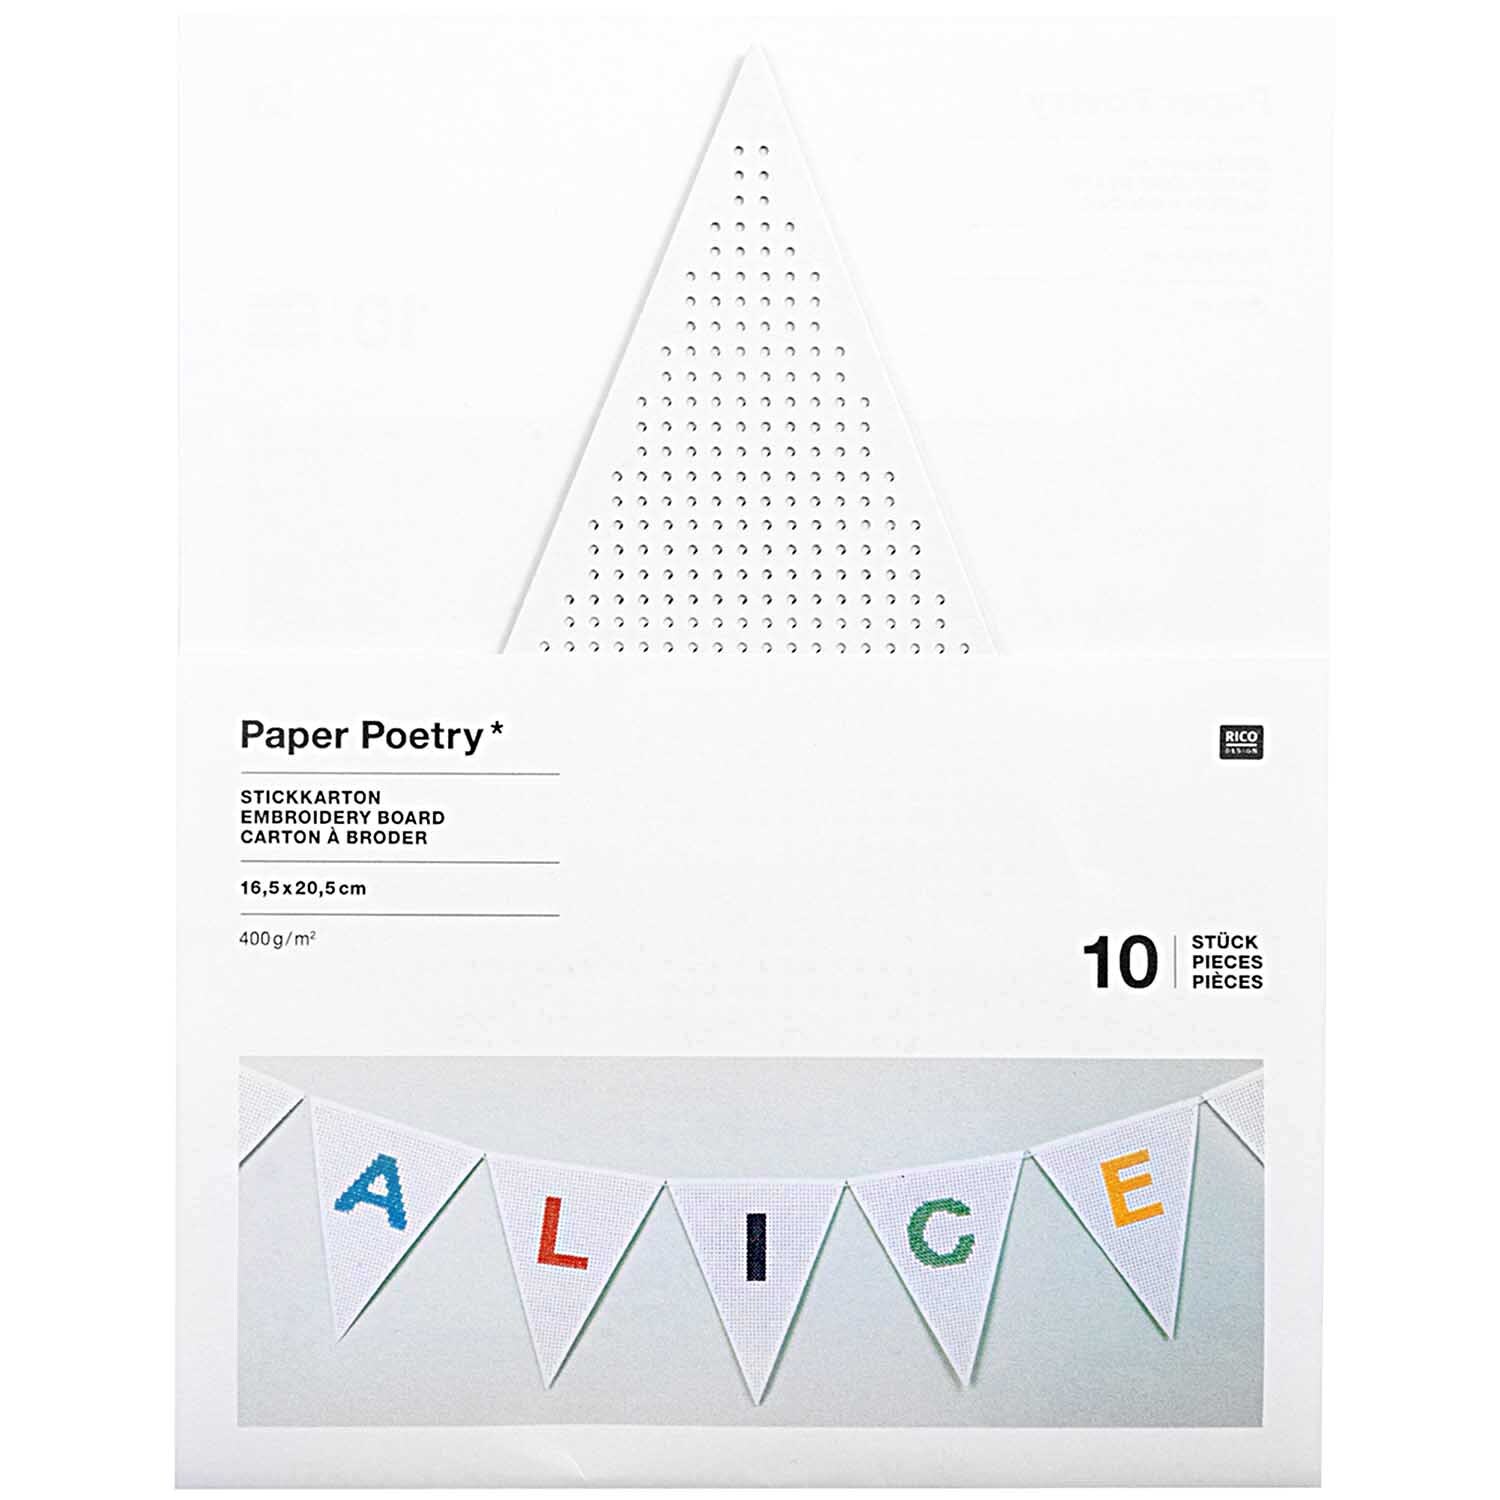 Paper Poetry Stickkarton Wimpelgirlande 10 Stück